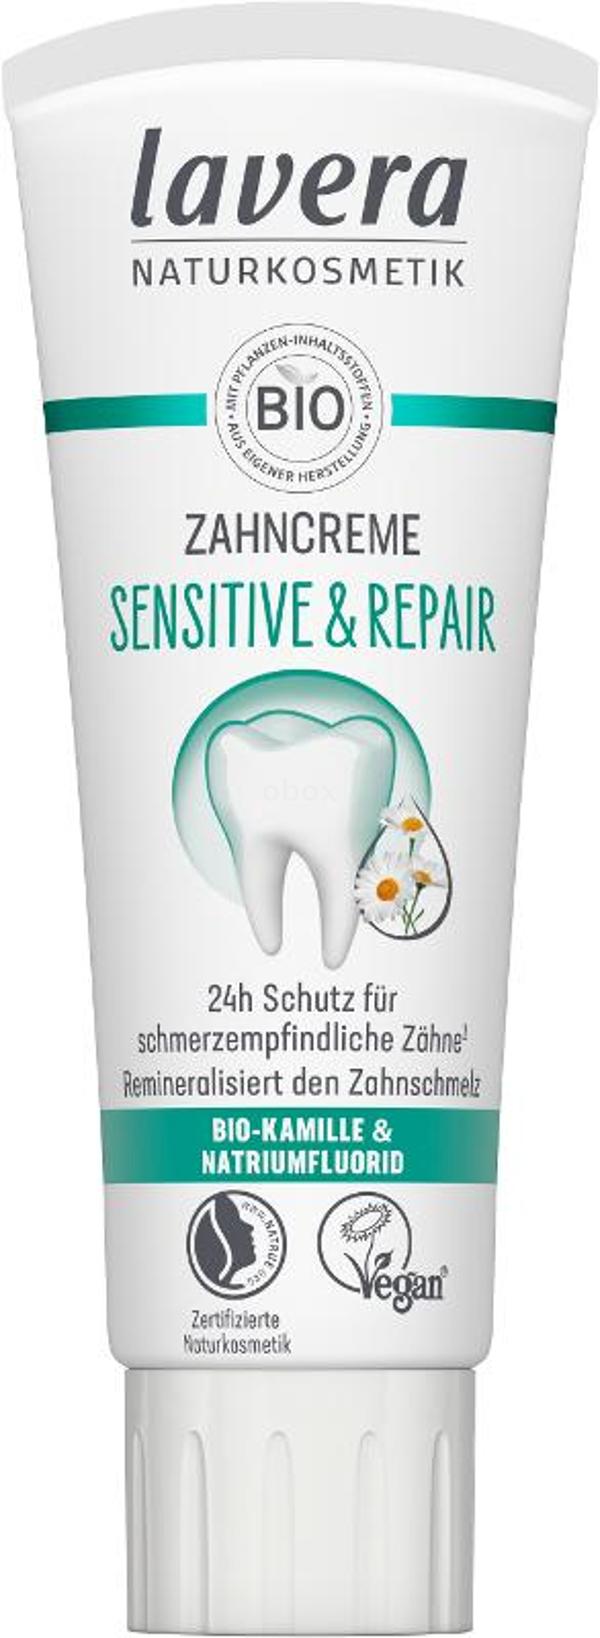 Produktfoto zu Zahncreme basis sensitiv 75ml